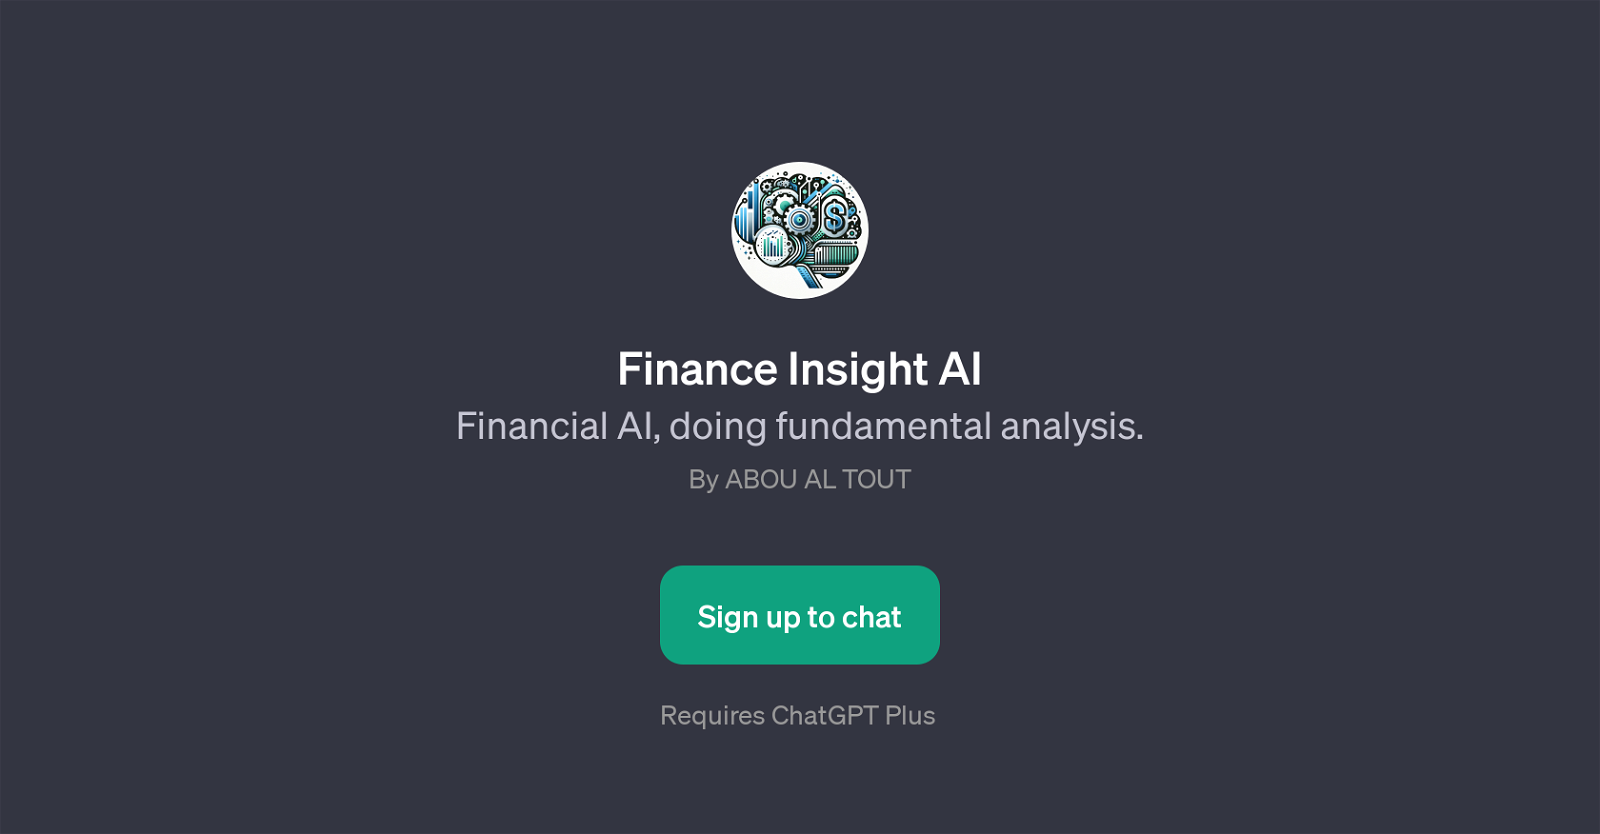 Finance Insight AI website